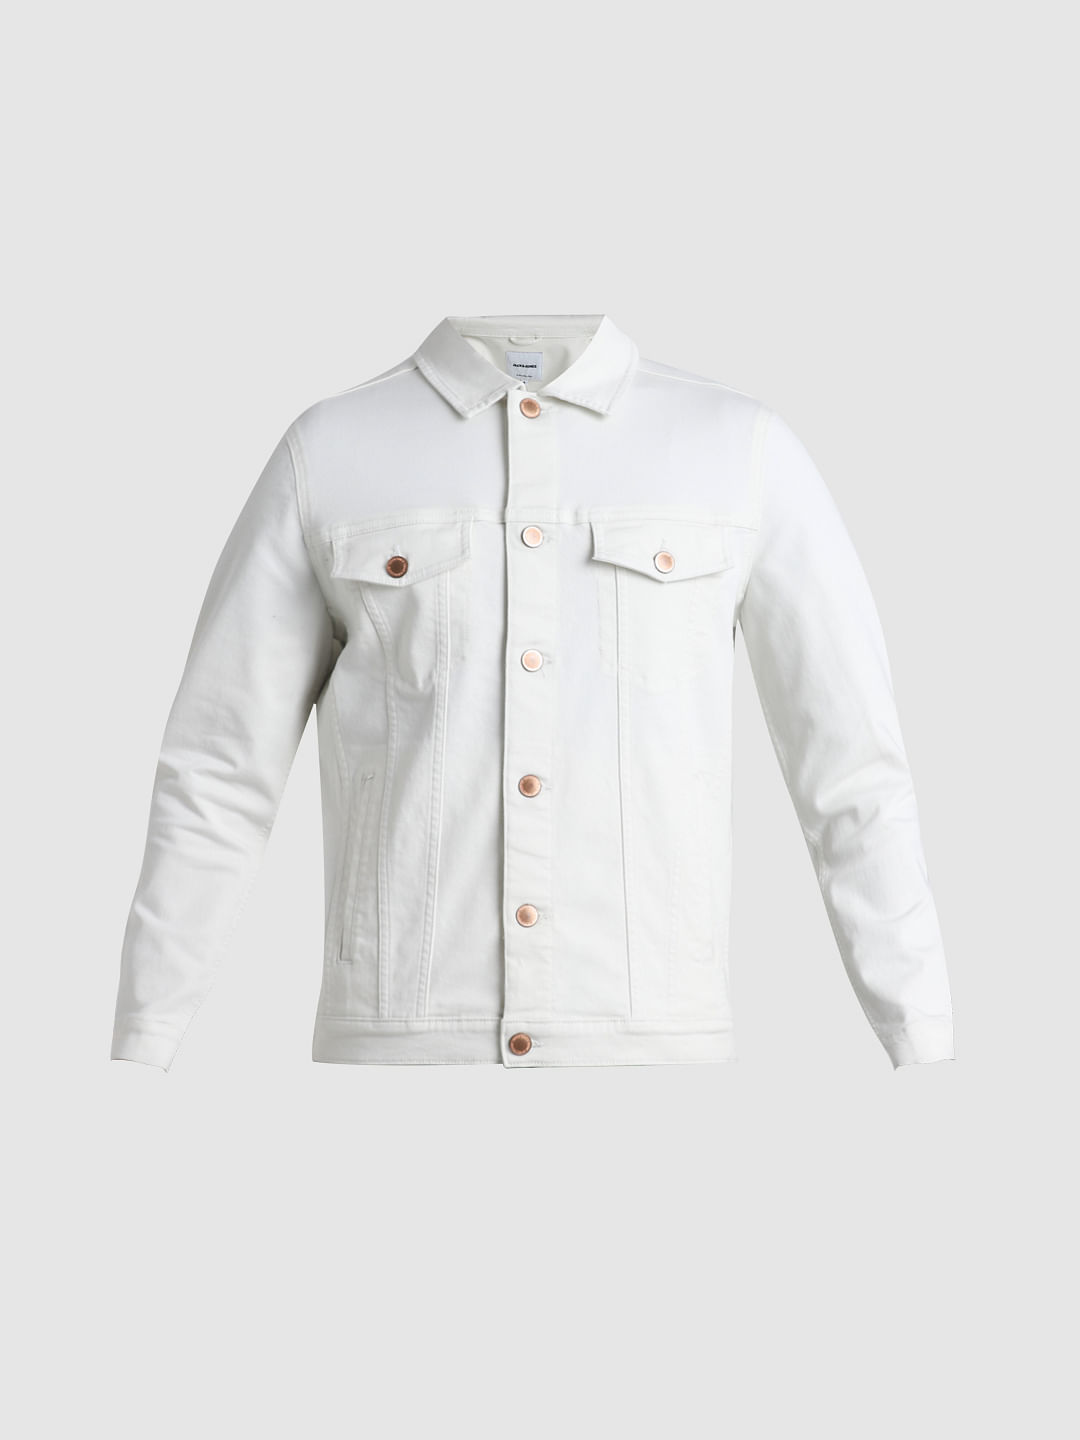 White Trucker Cotton Denim Jacket with Badges | GRFSDJ-432 | Cilory.com